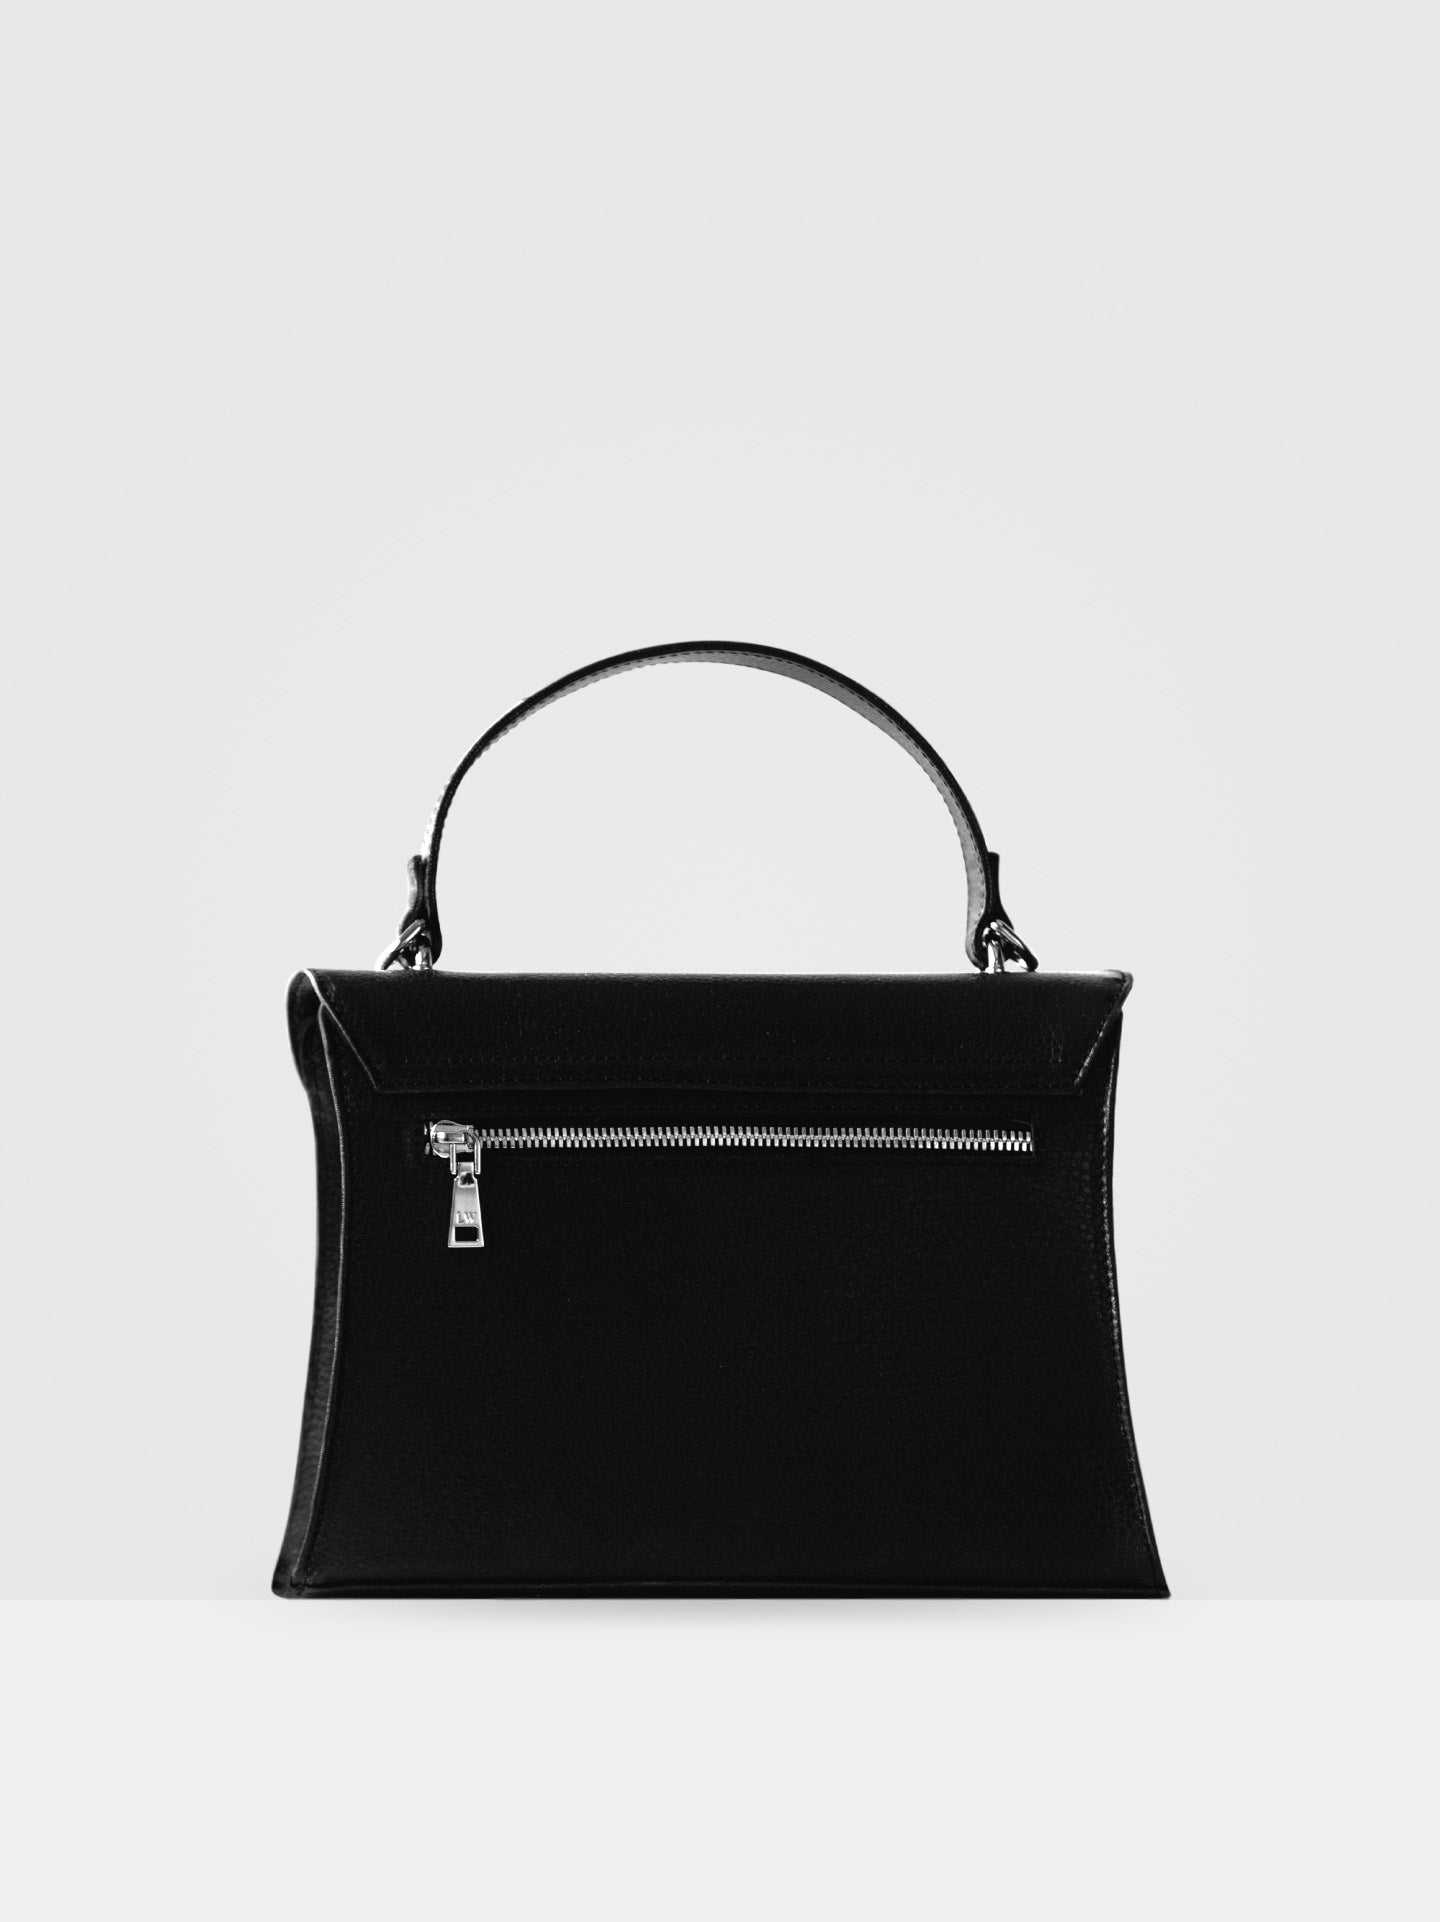 Ivy Top Handle Bag in Black & Silver